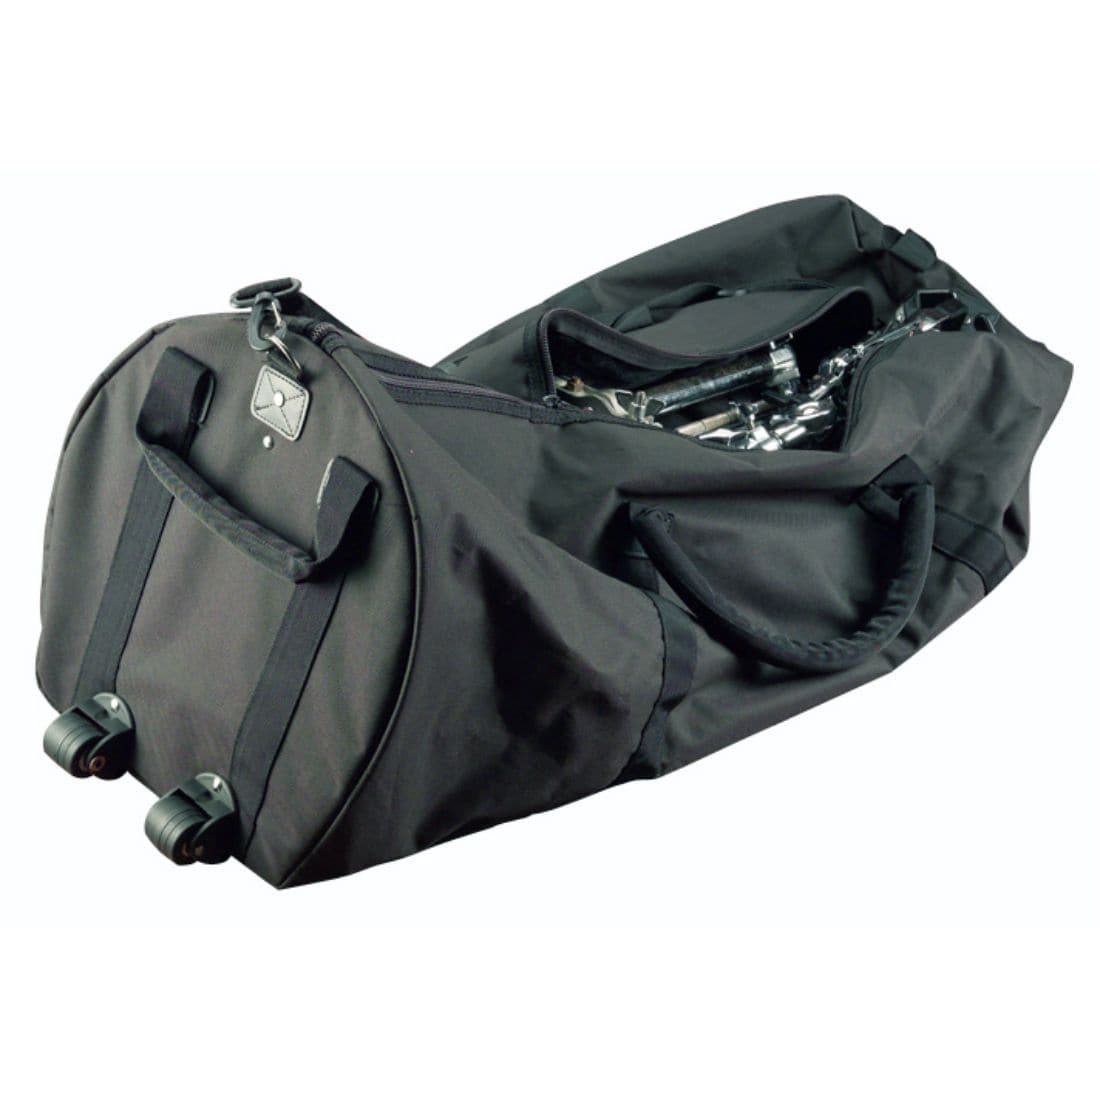 Gator Protechtor Drum Hardware Bag 14x36 w/ Wheels